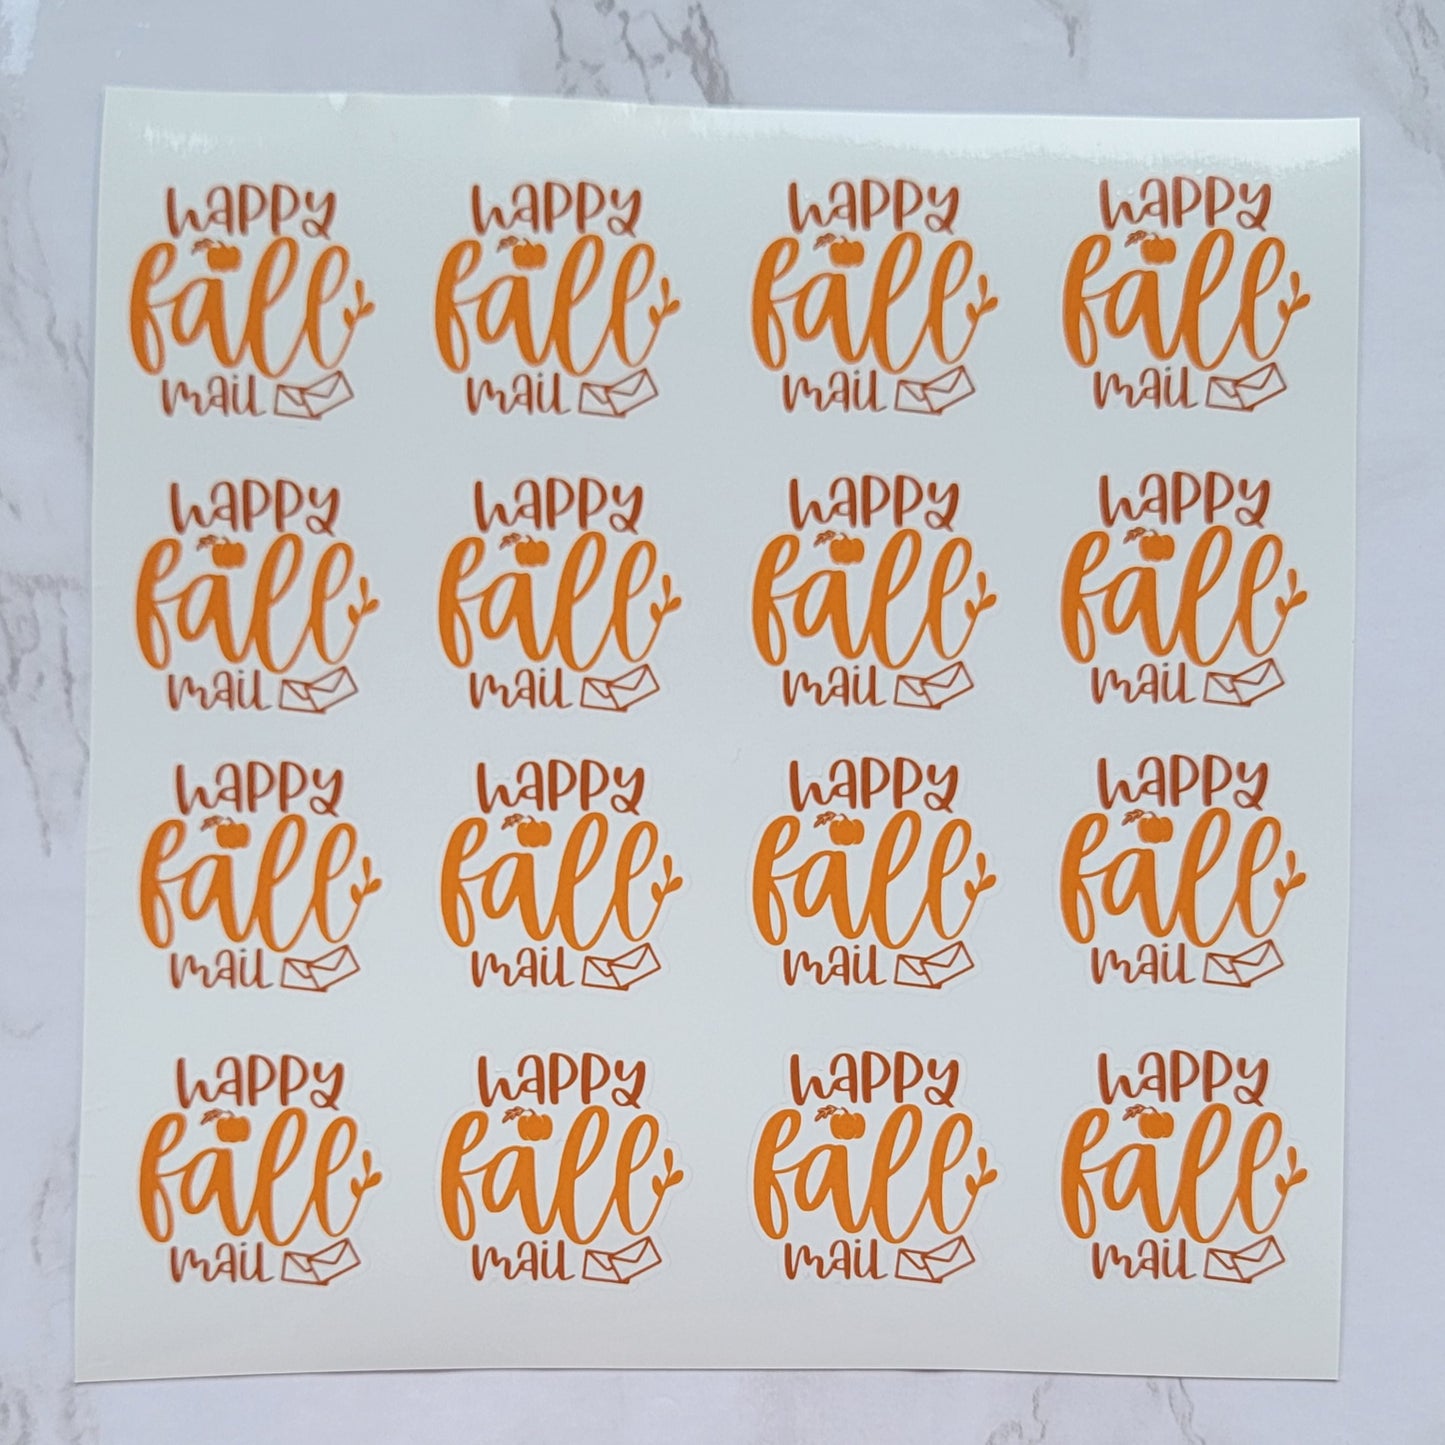 Autumn Theme - "Happy Fall Mail" - Dark/Light Orange w/ White Background - Waterproof Sticker Sheet